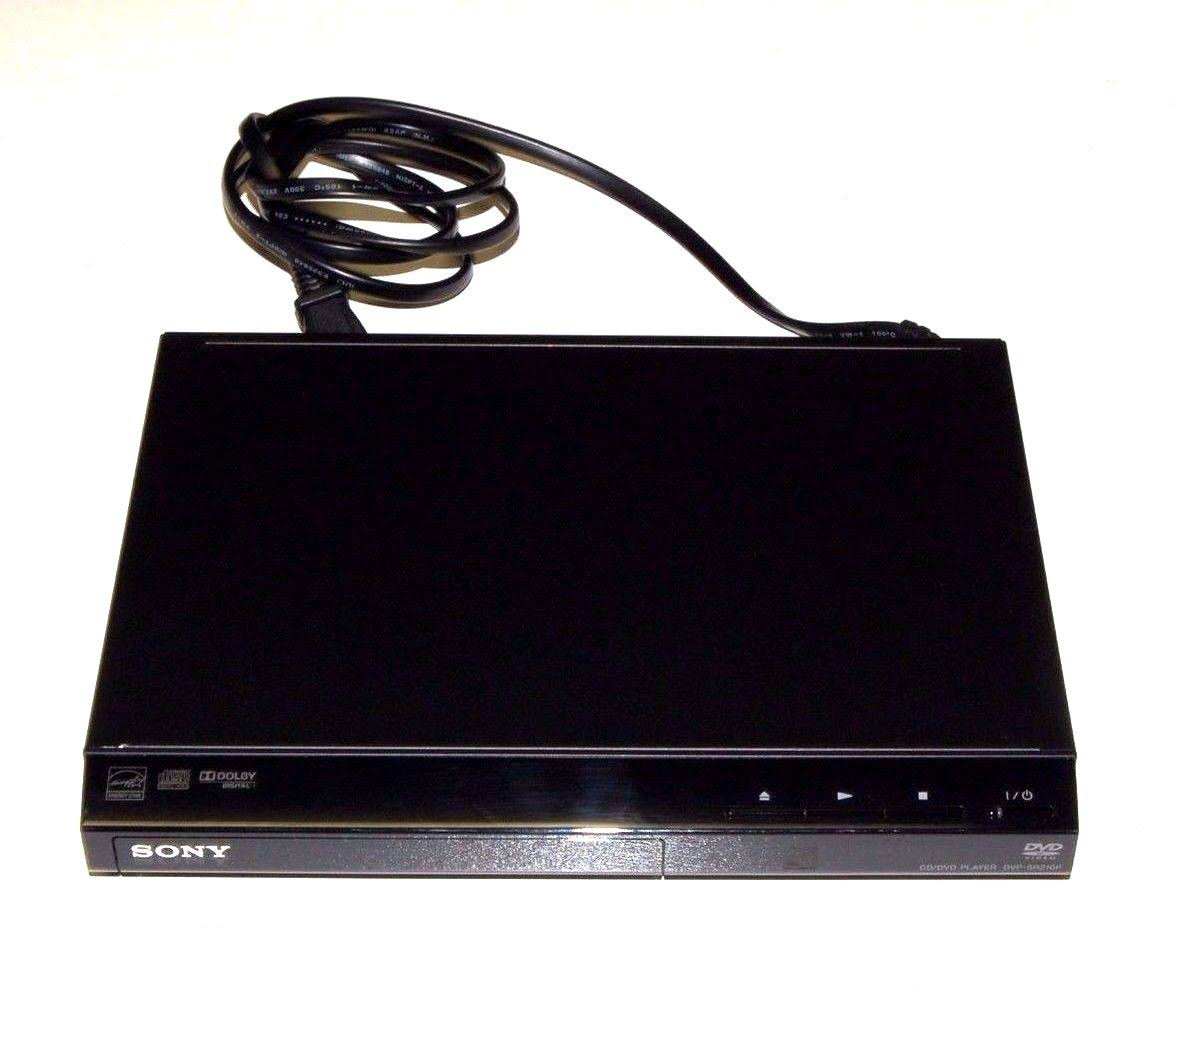 Sony DVPSR210PDVDPlayer(ProgressiveScan)withMiniToolBox(cog)